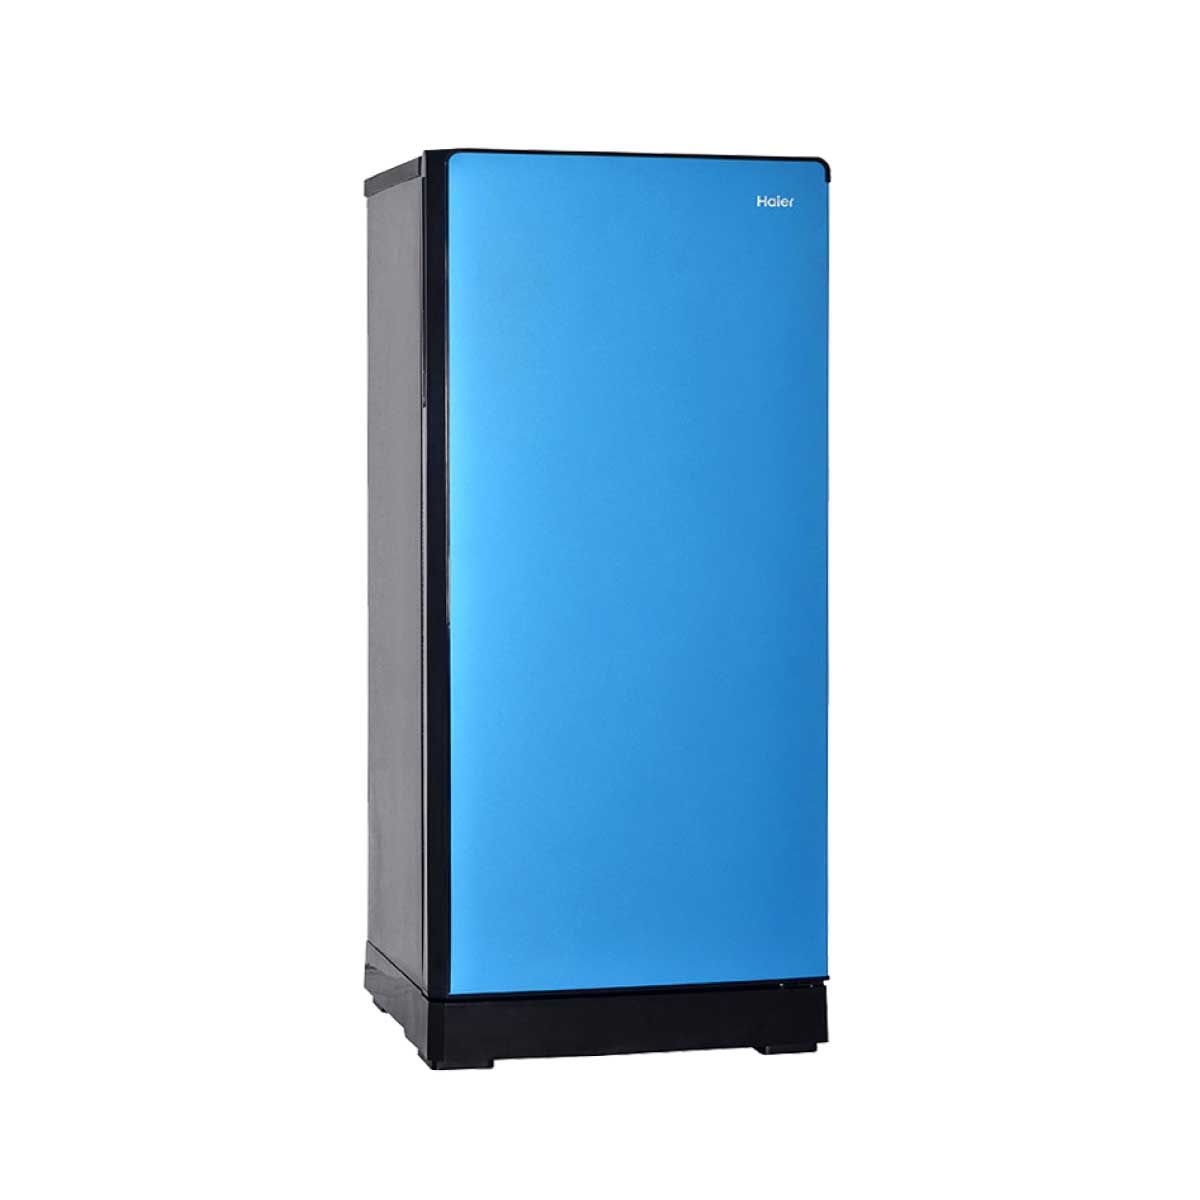 HAIER ตู้เย็น 1 ประตู 6.3 คิว  สีฟ้า รุ่น HR-DMBX18